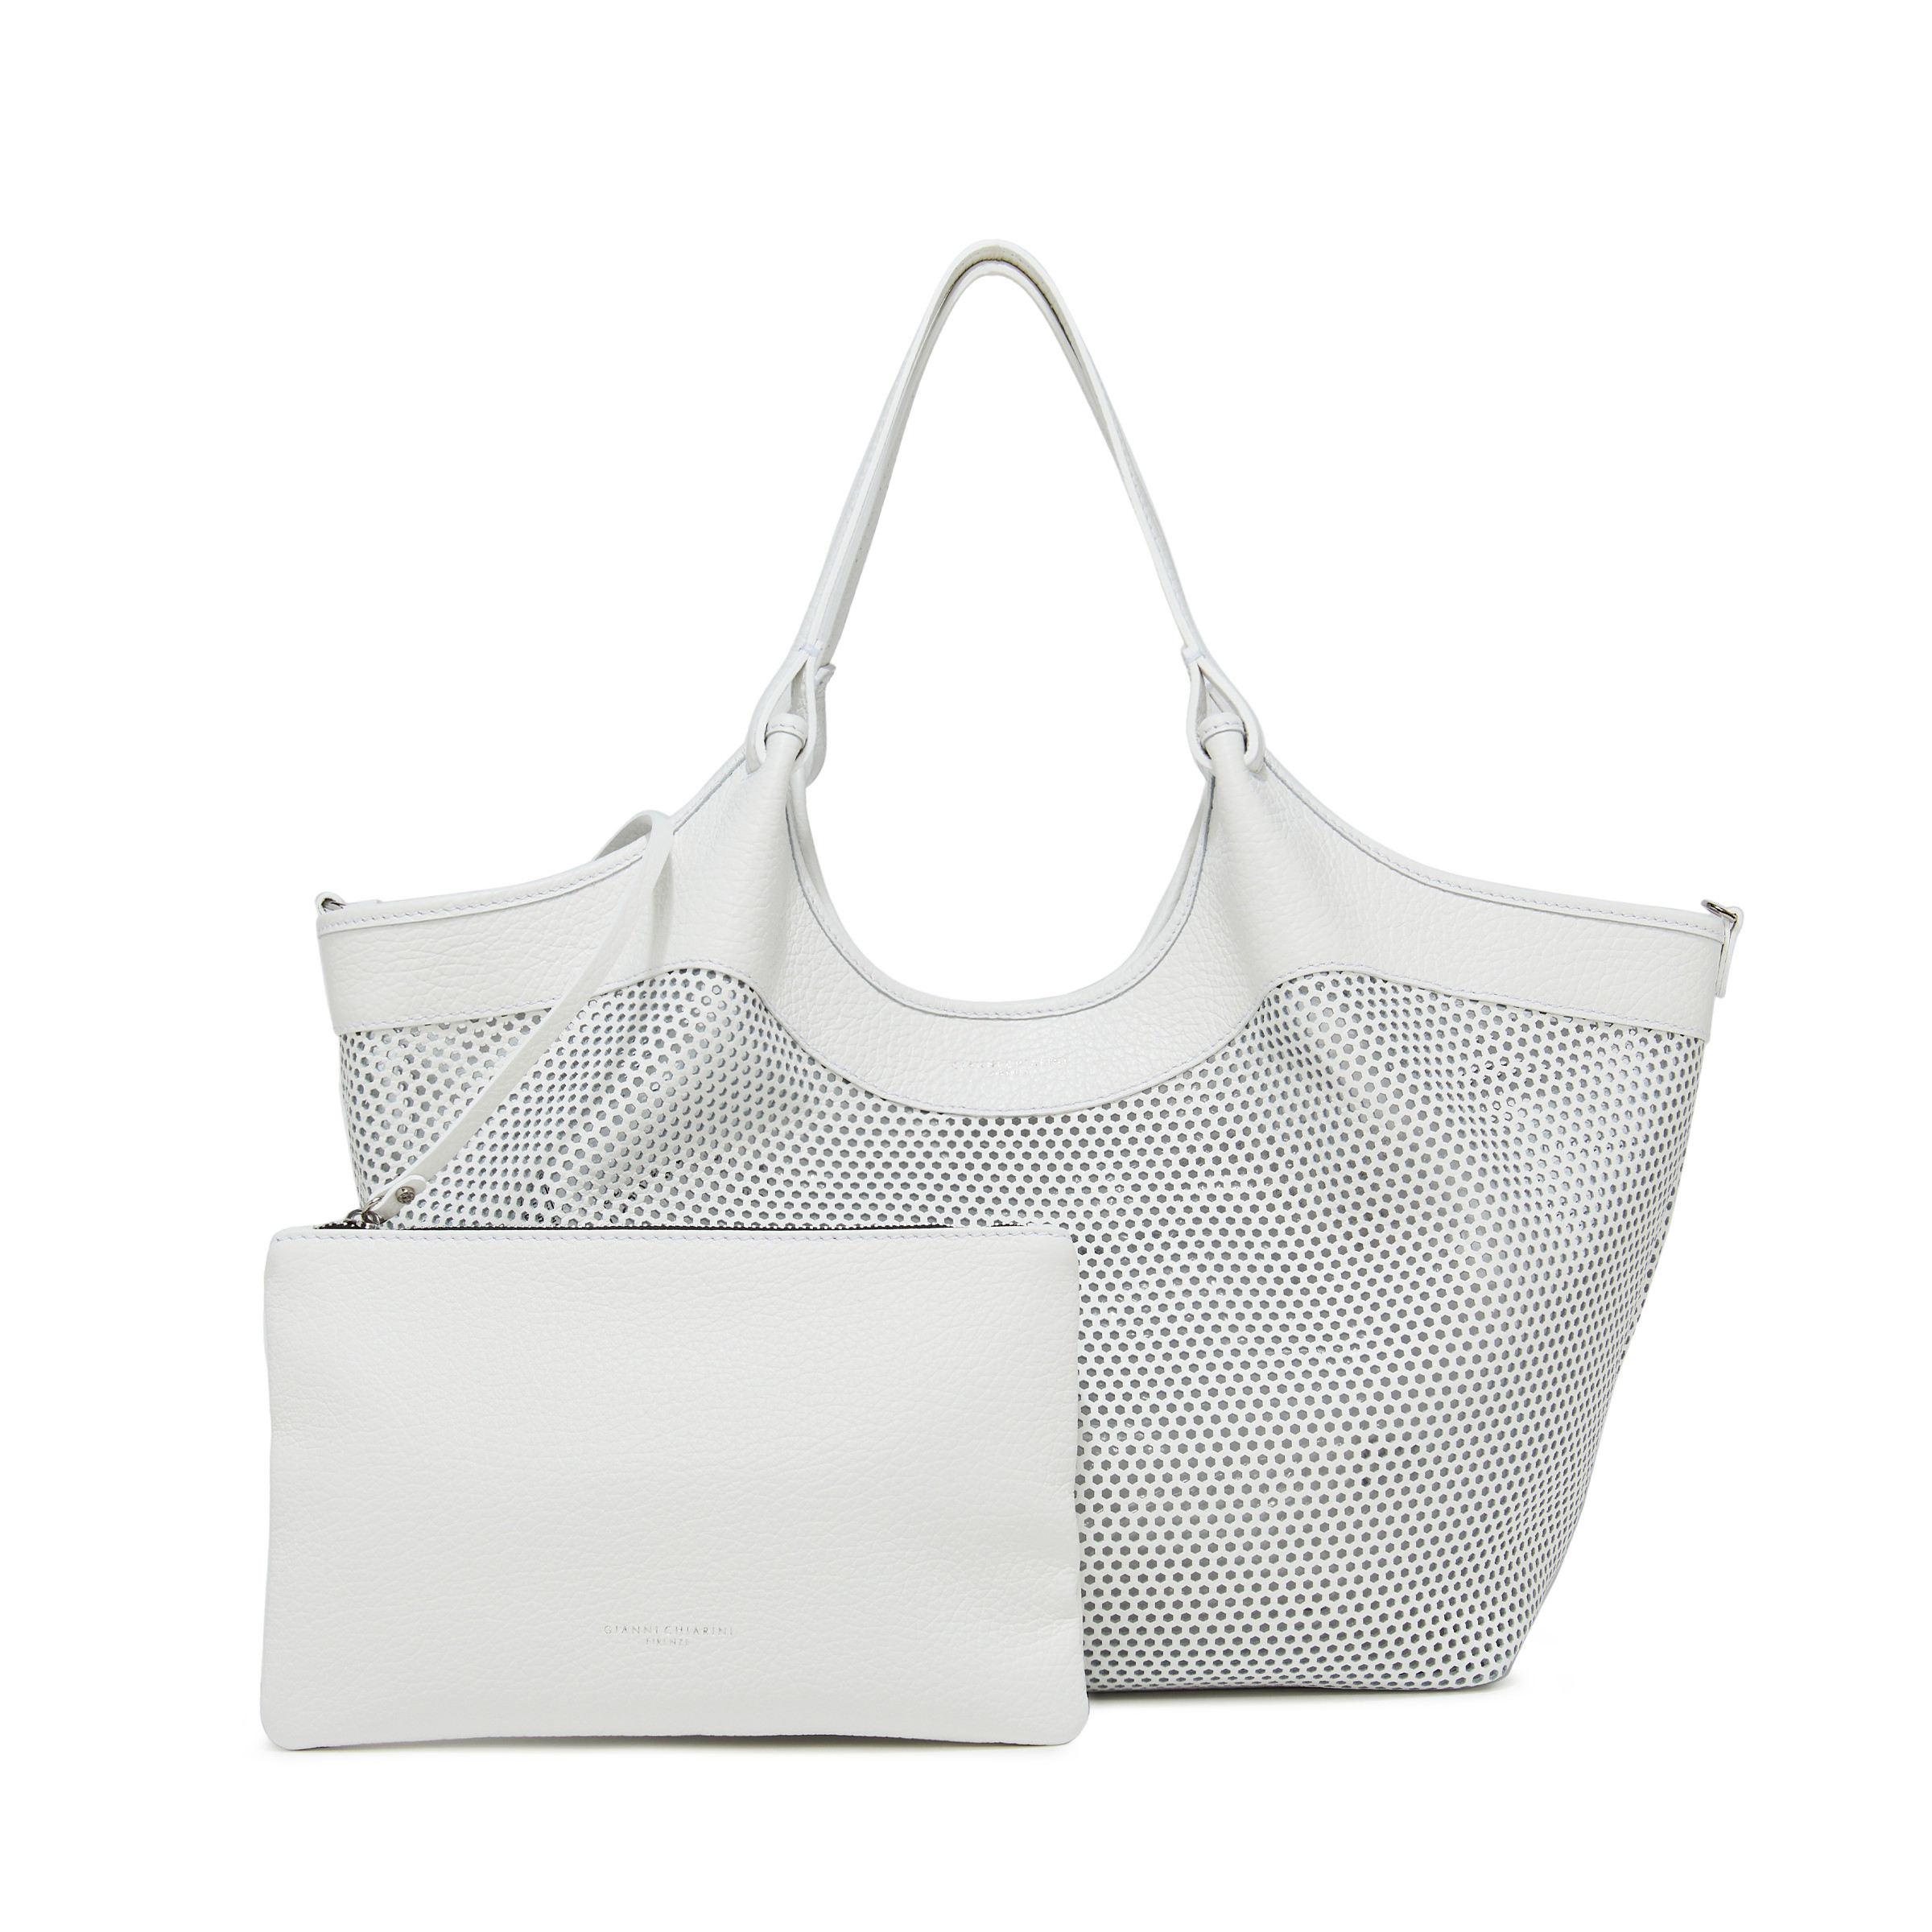 Gianni Chiarini - Dua bag in leather, White, large image number 3